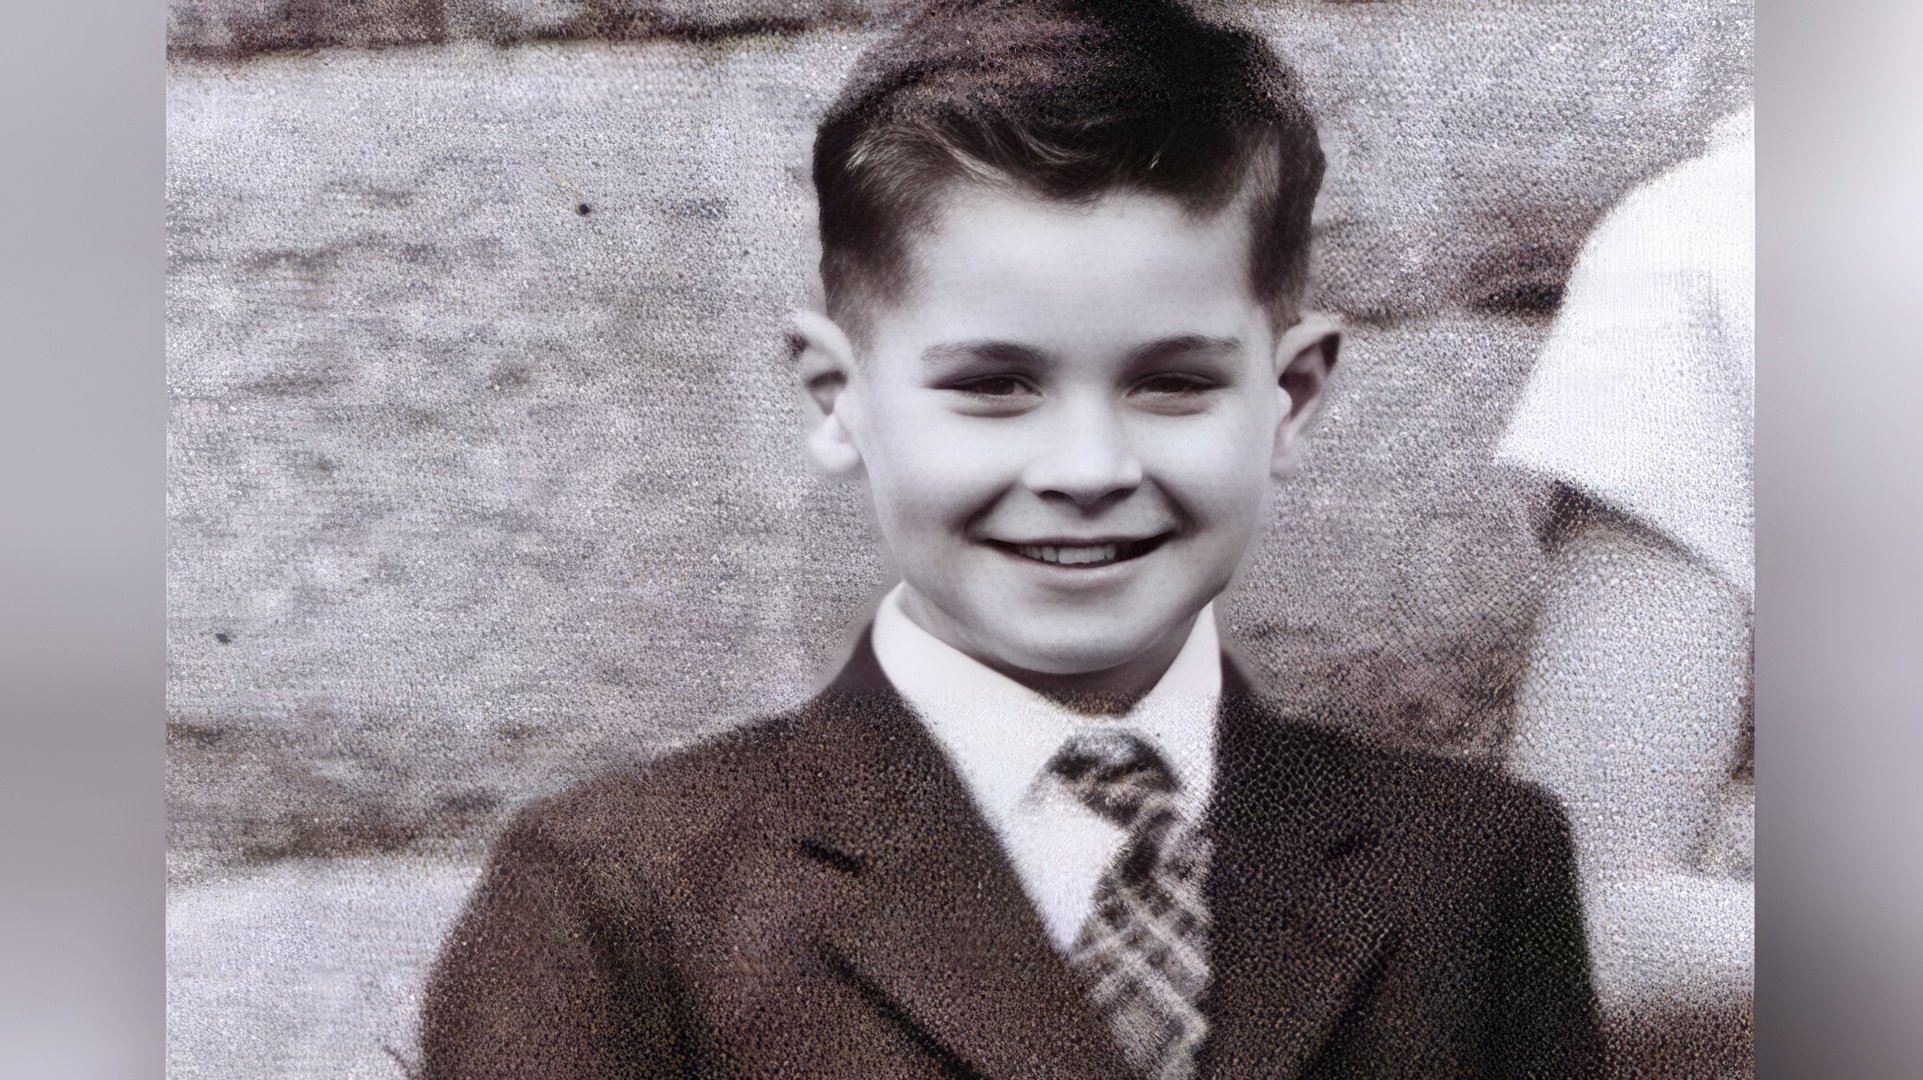 Ozzy Osbourne during his school years